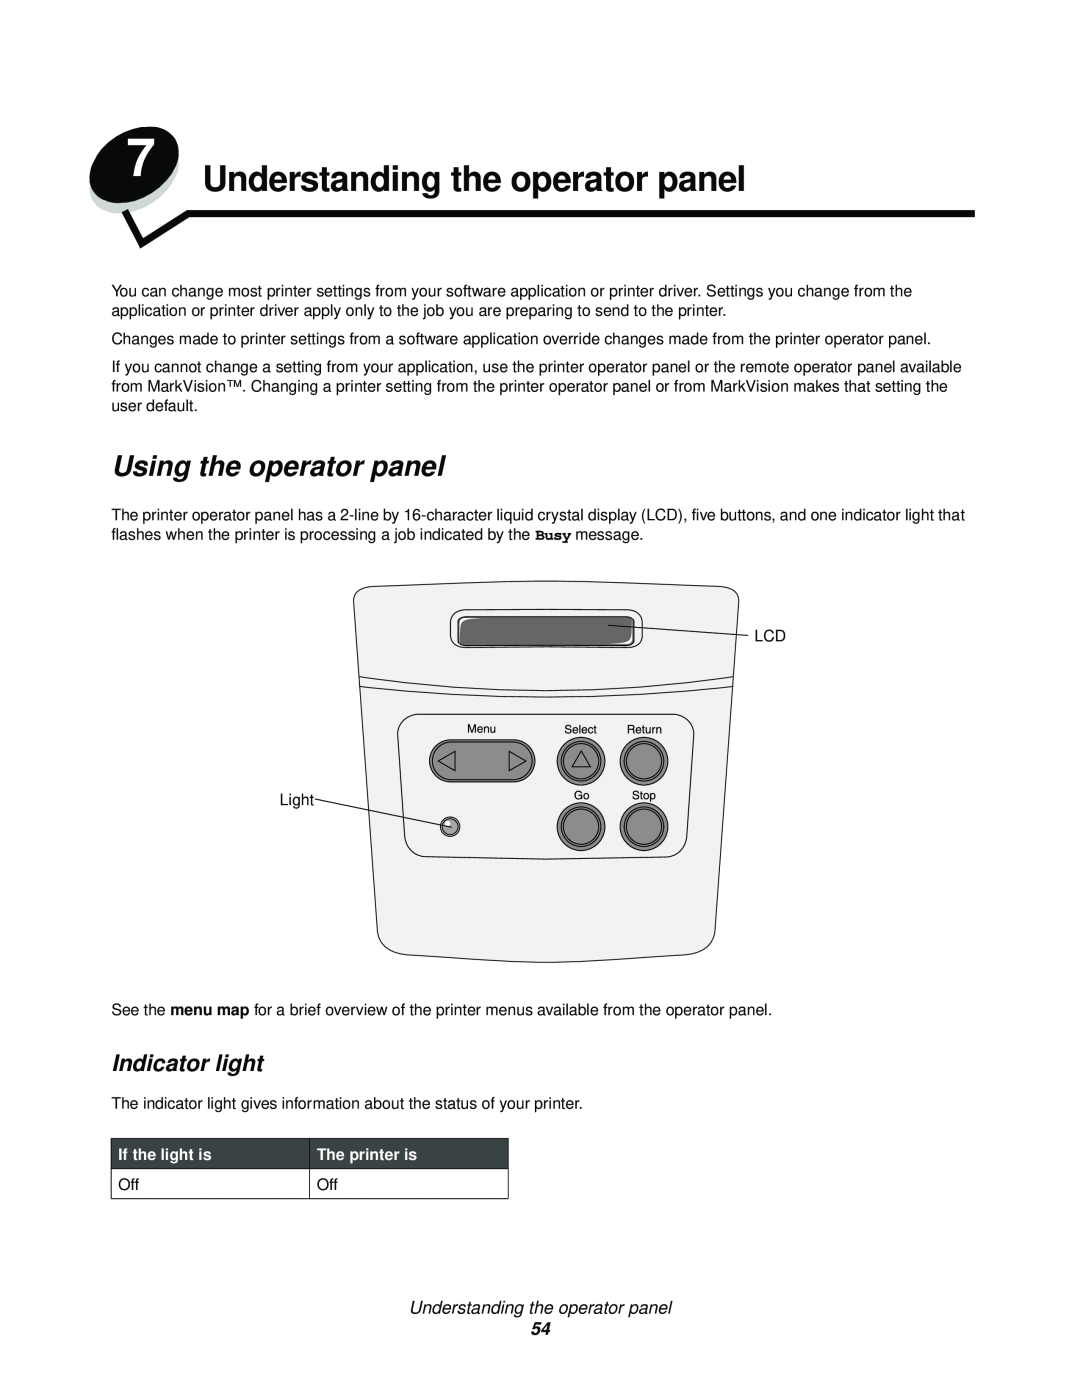 Lexmark 342n Understanding the operator panel, Using the operator panel, Indicator light, If the light is, The printer is 